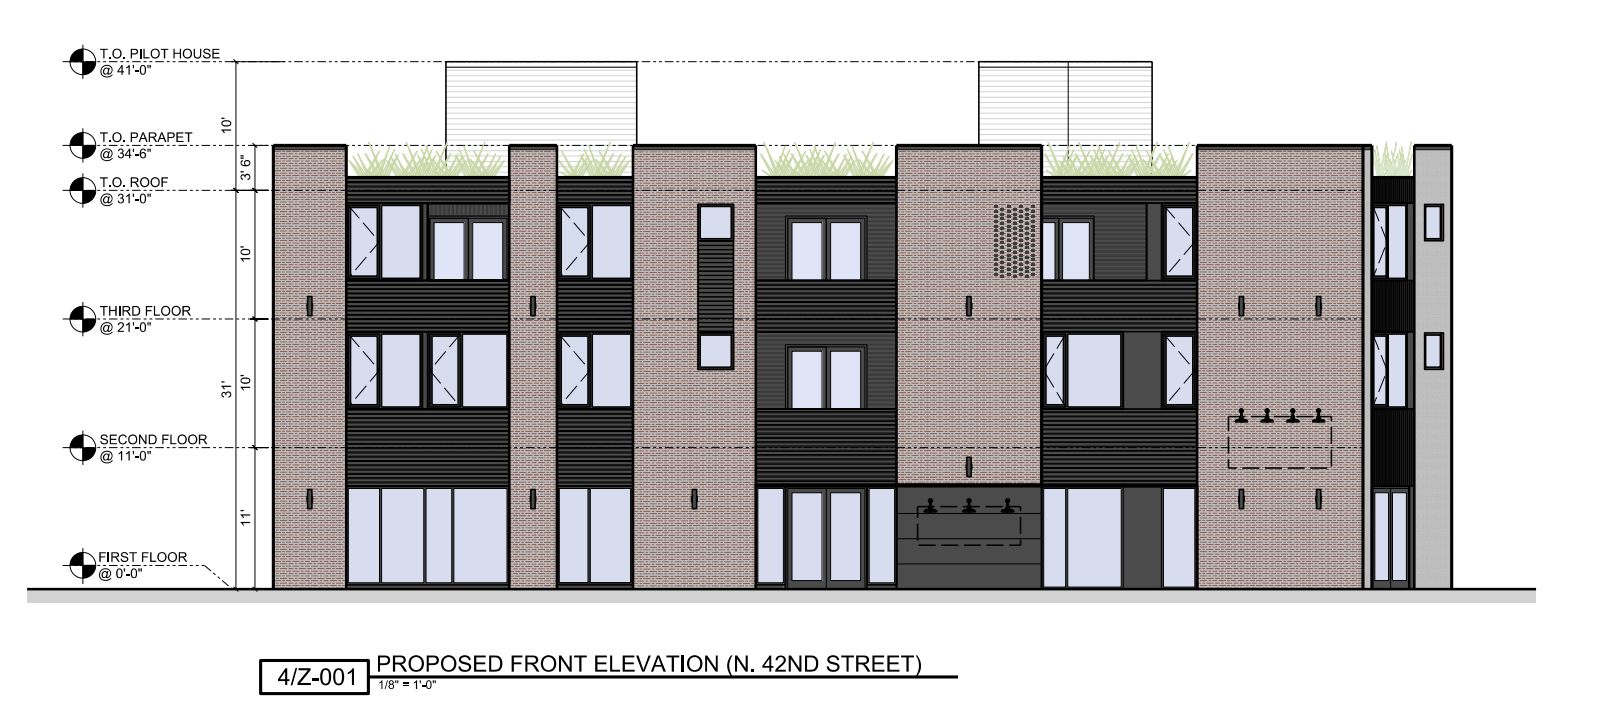 4181 Mantua Avenue. Building elevation. Credit: Studio C Architecture via the City of Philadelphia Department of Planning and Development